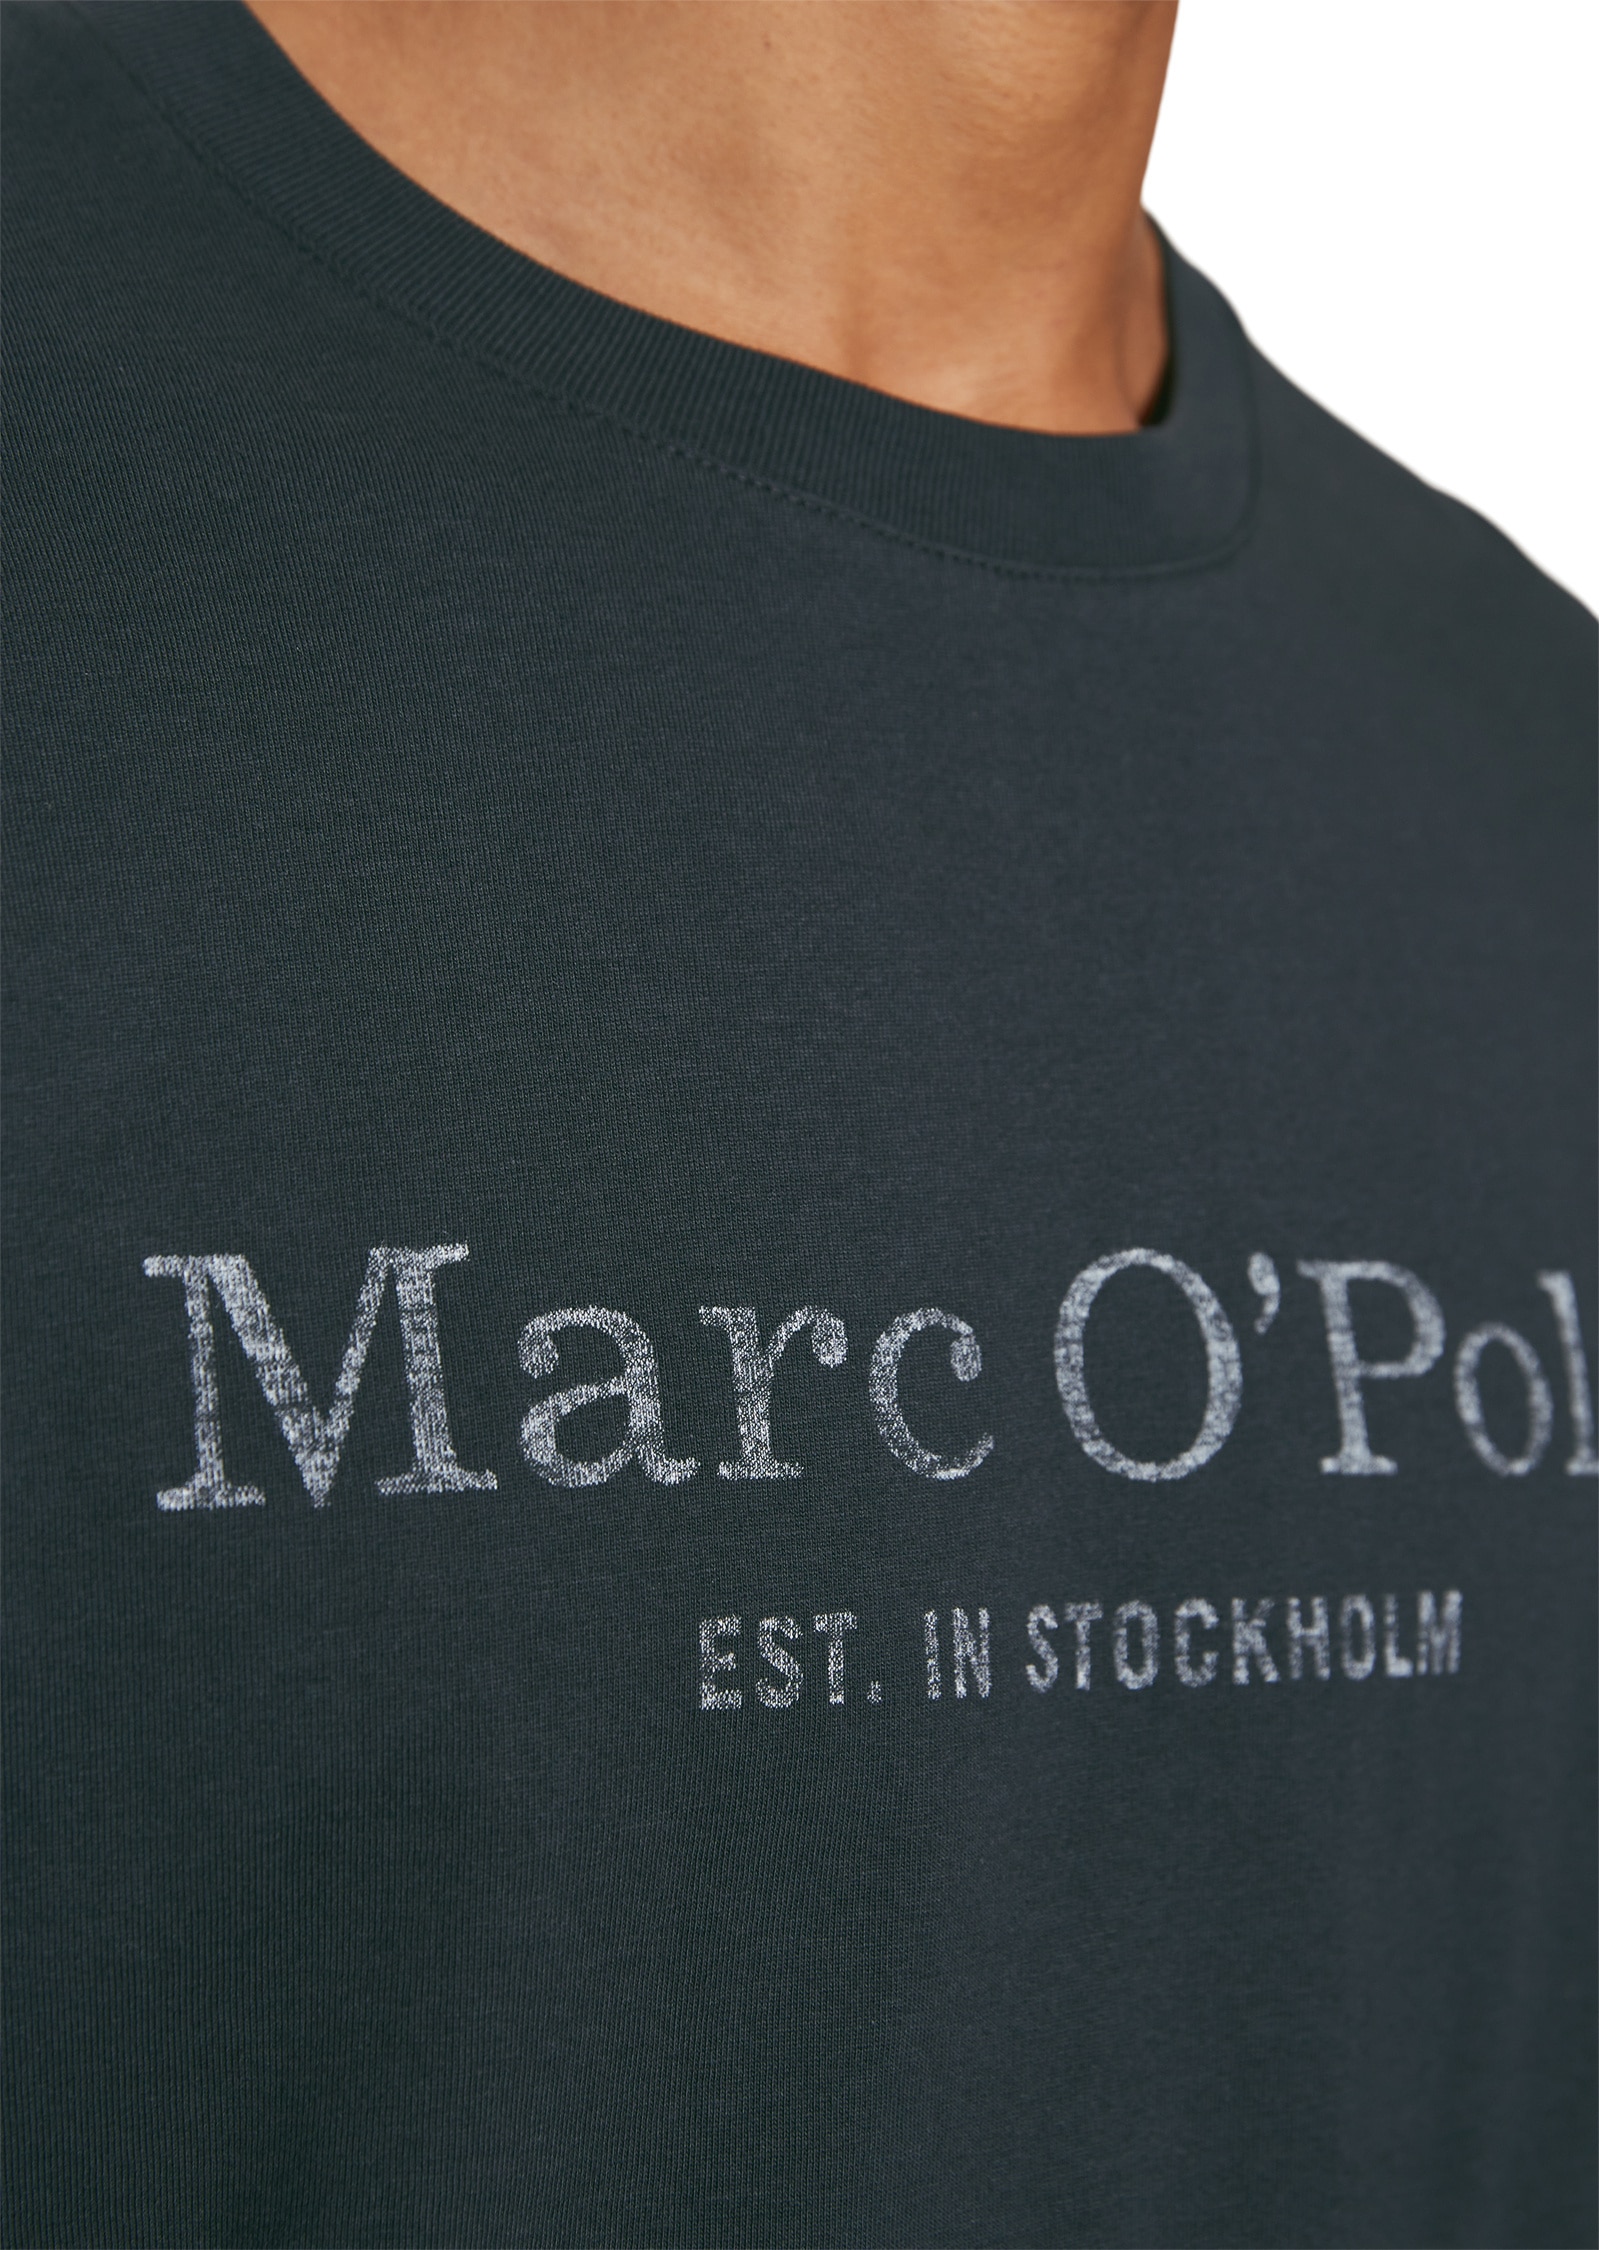 Marc O'Polo Langarmshirt »aus hochwertiger Bio-Baumwolle«